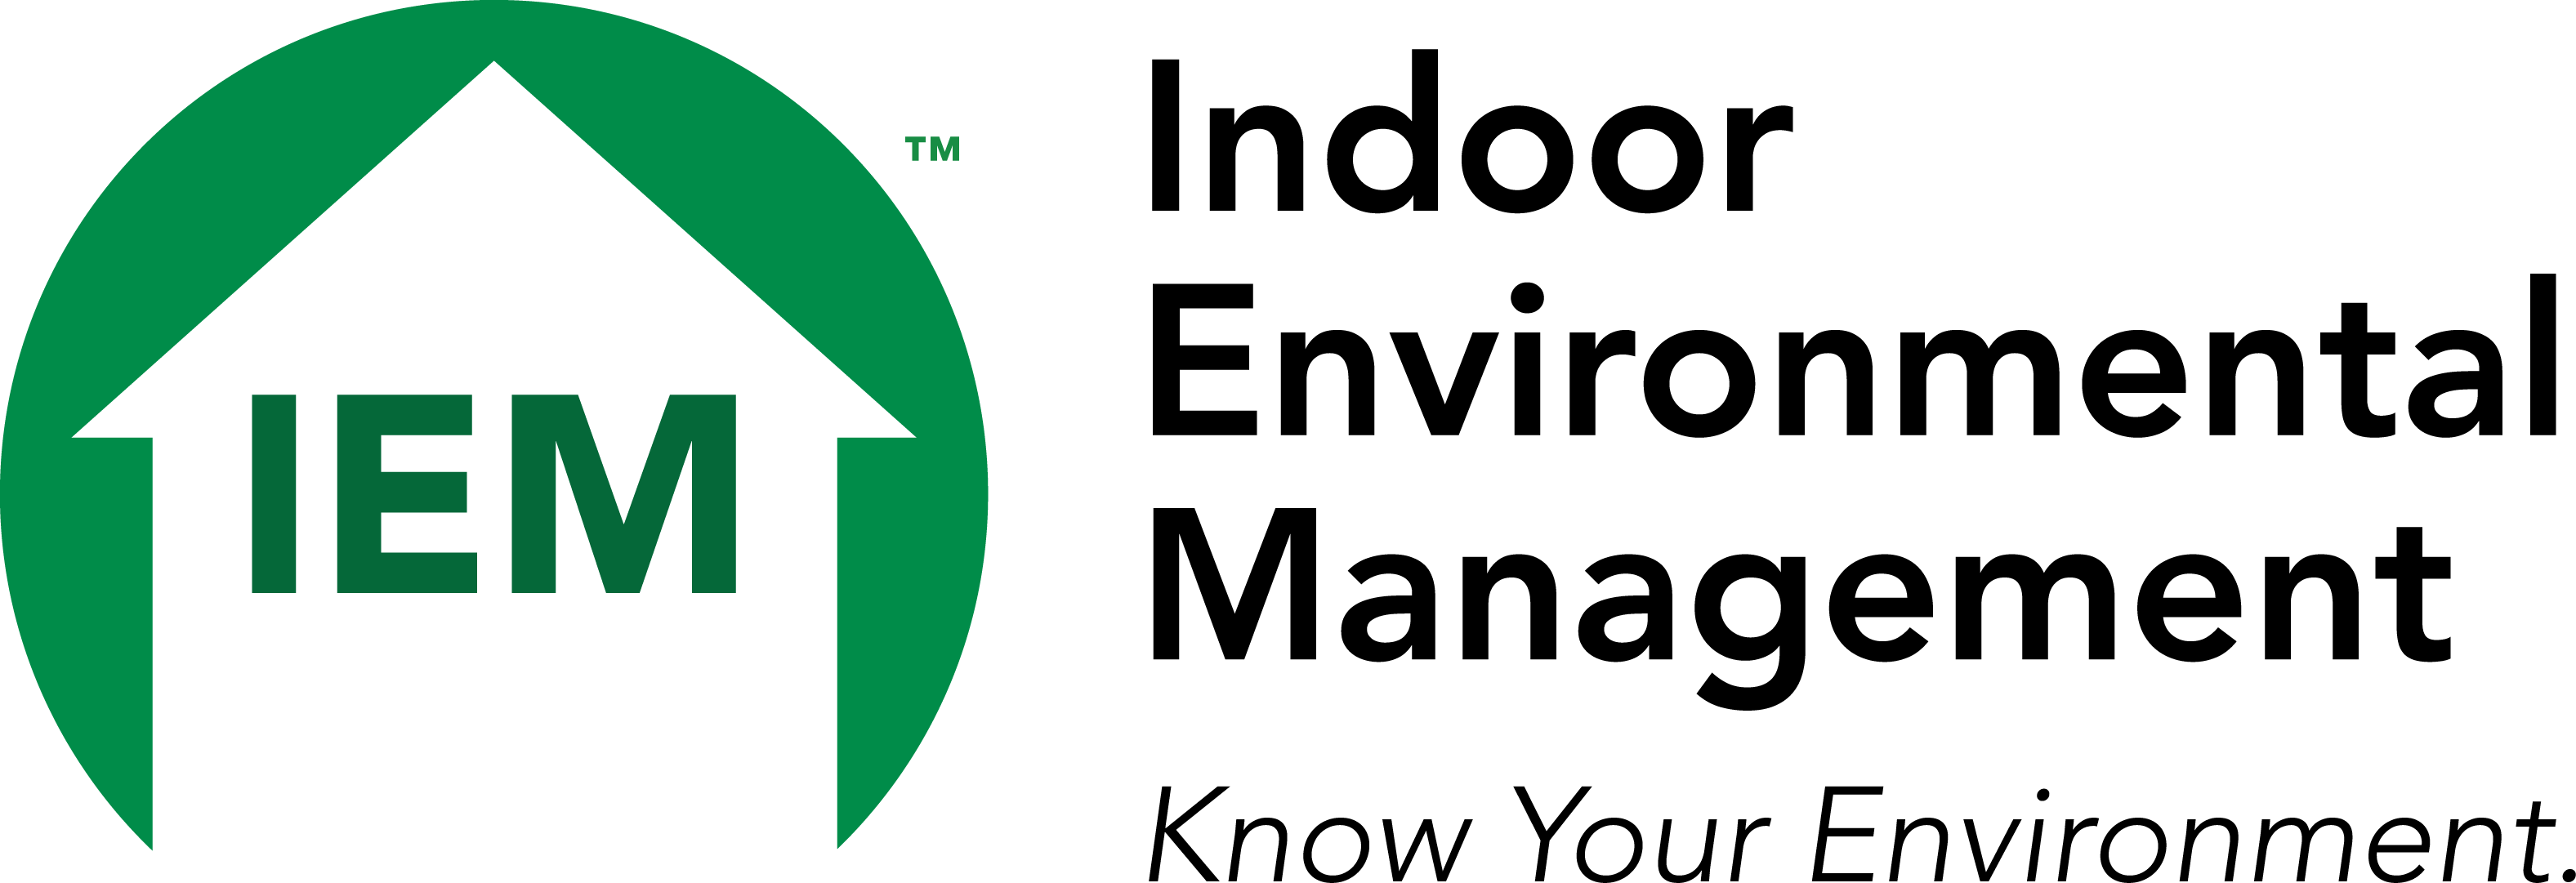 Indoor Environmental Management